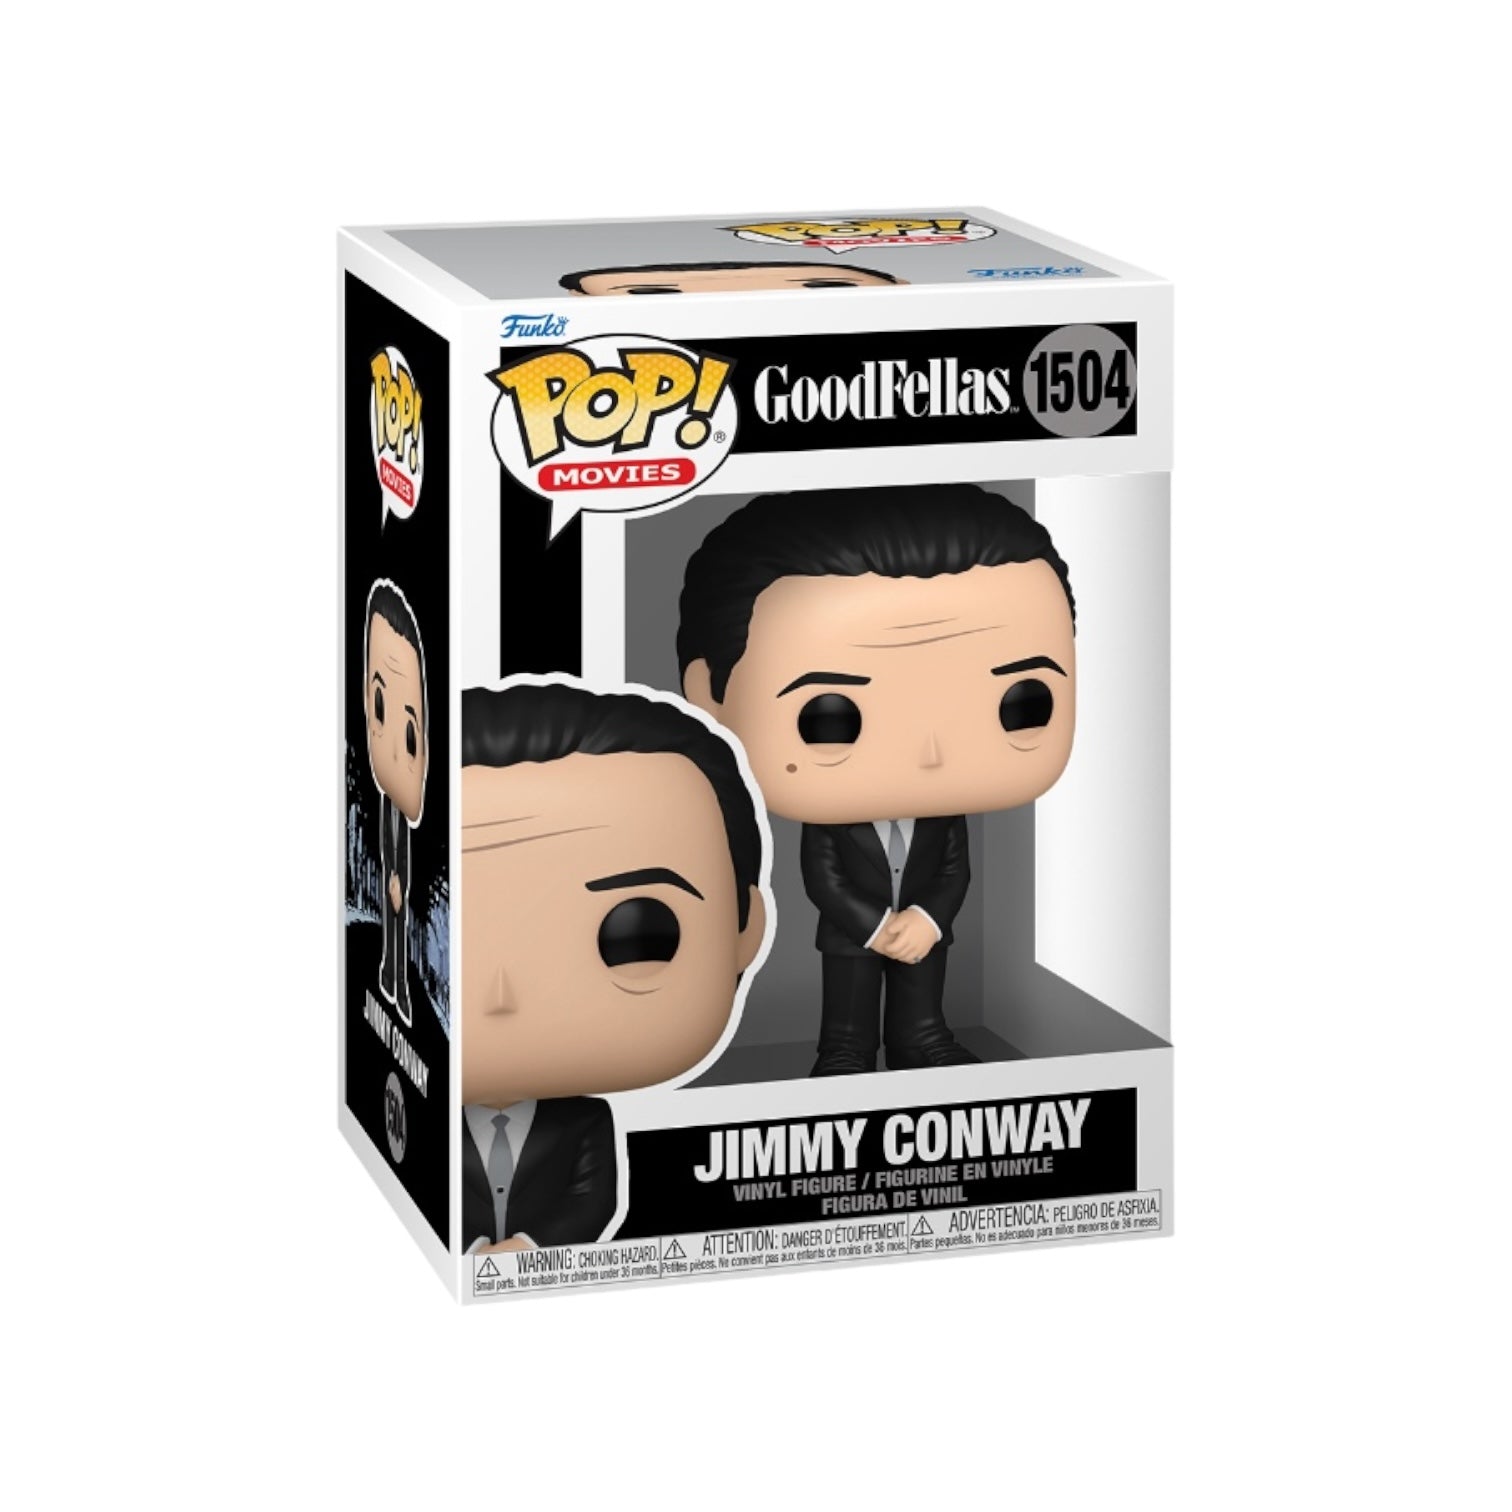 Jimmy Conway #1504 Funko Pop! - Goodfellas